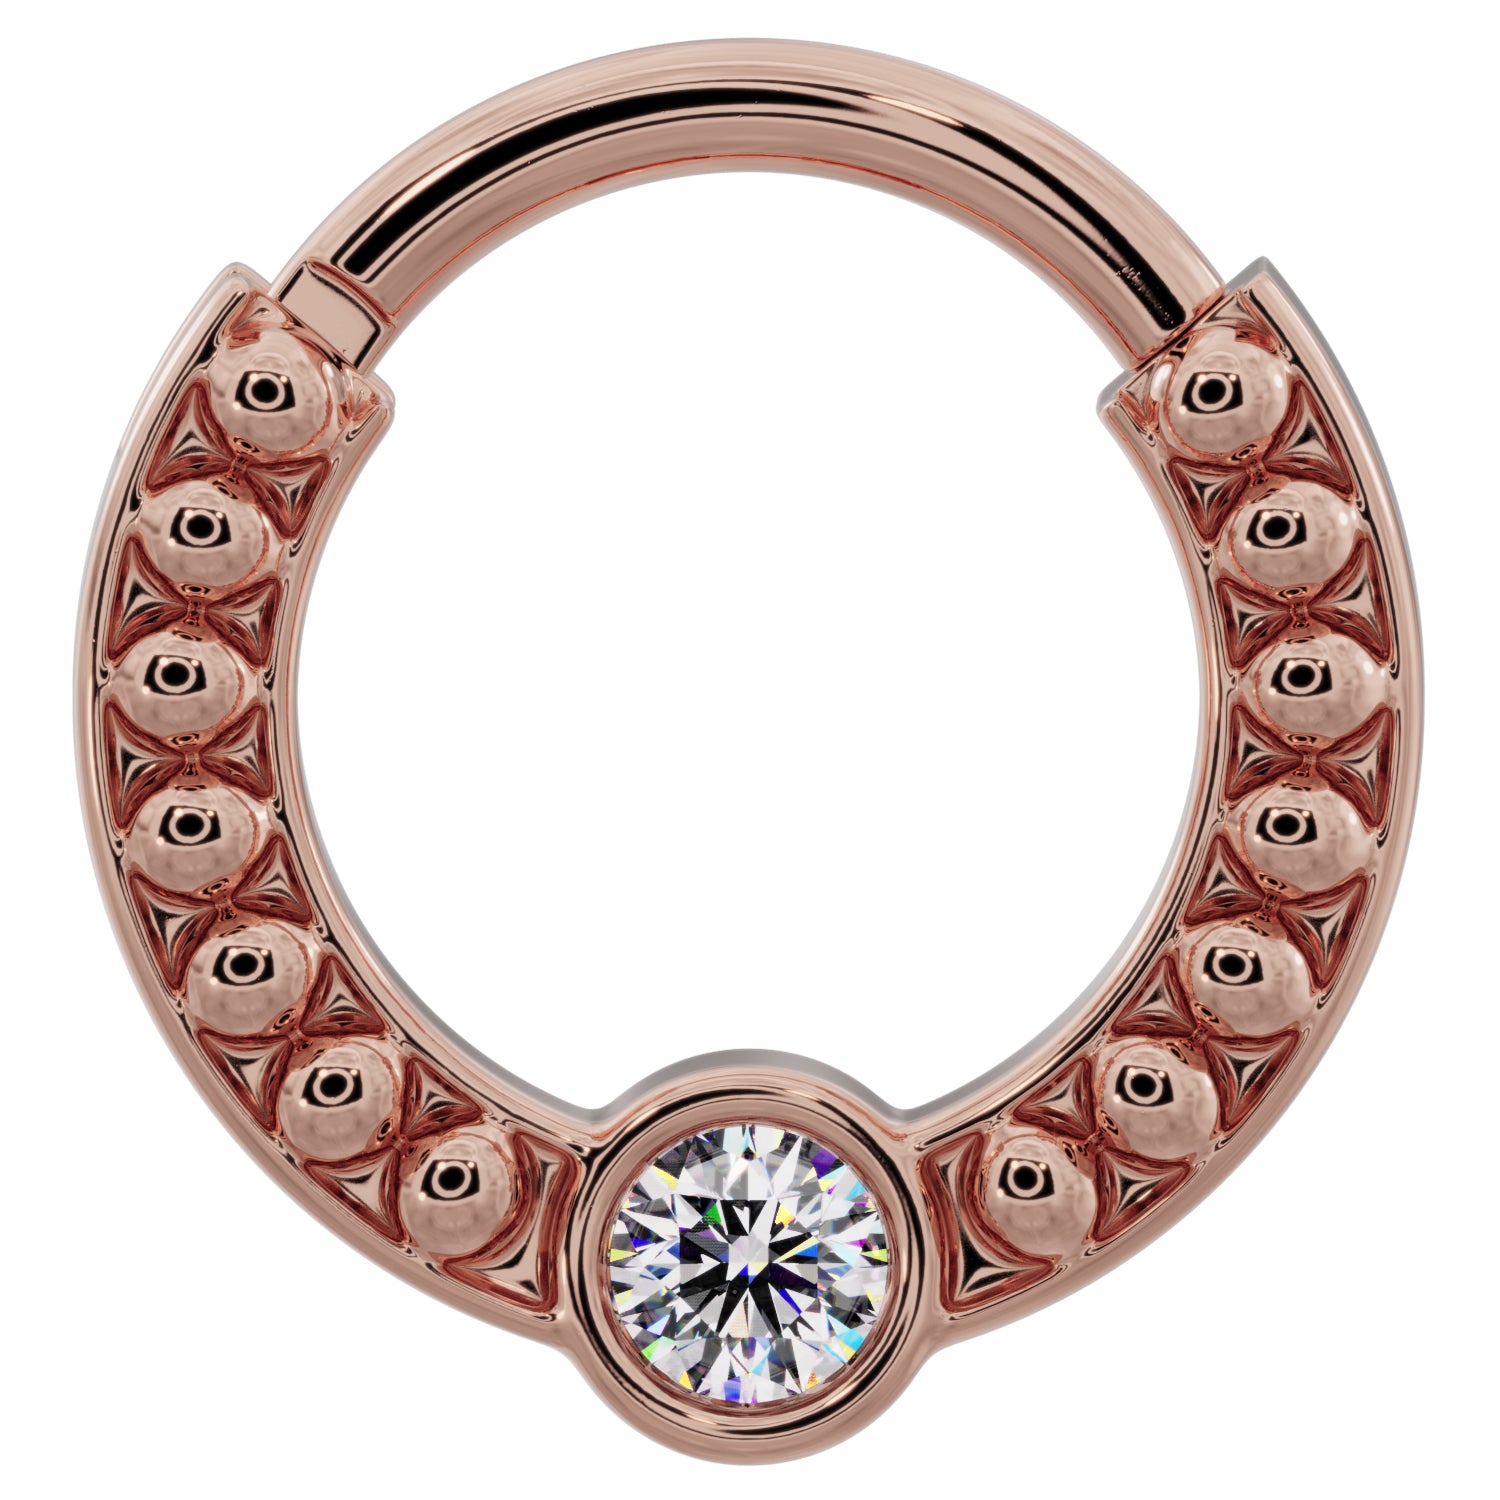 Diamond Bezel Channel-Set Dome Beads 14k Gold Clicker Ring-14K Rose Gold   16G (1.2mm)   3 8